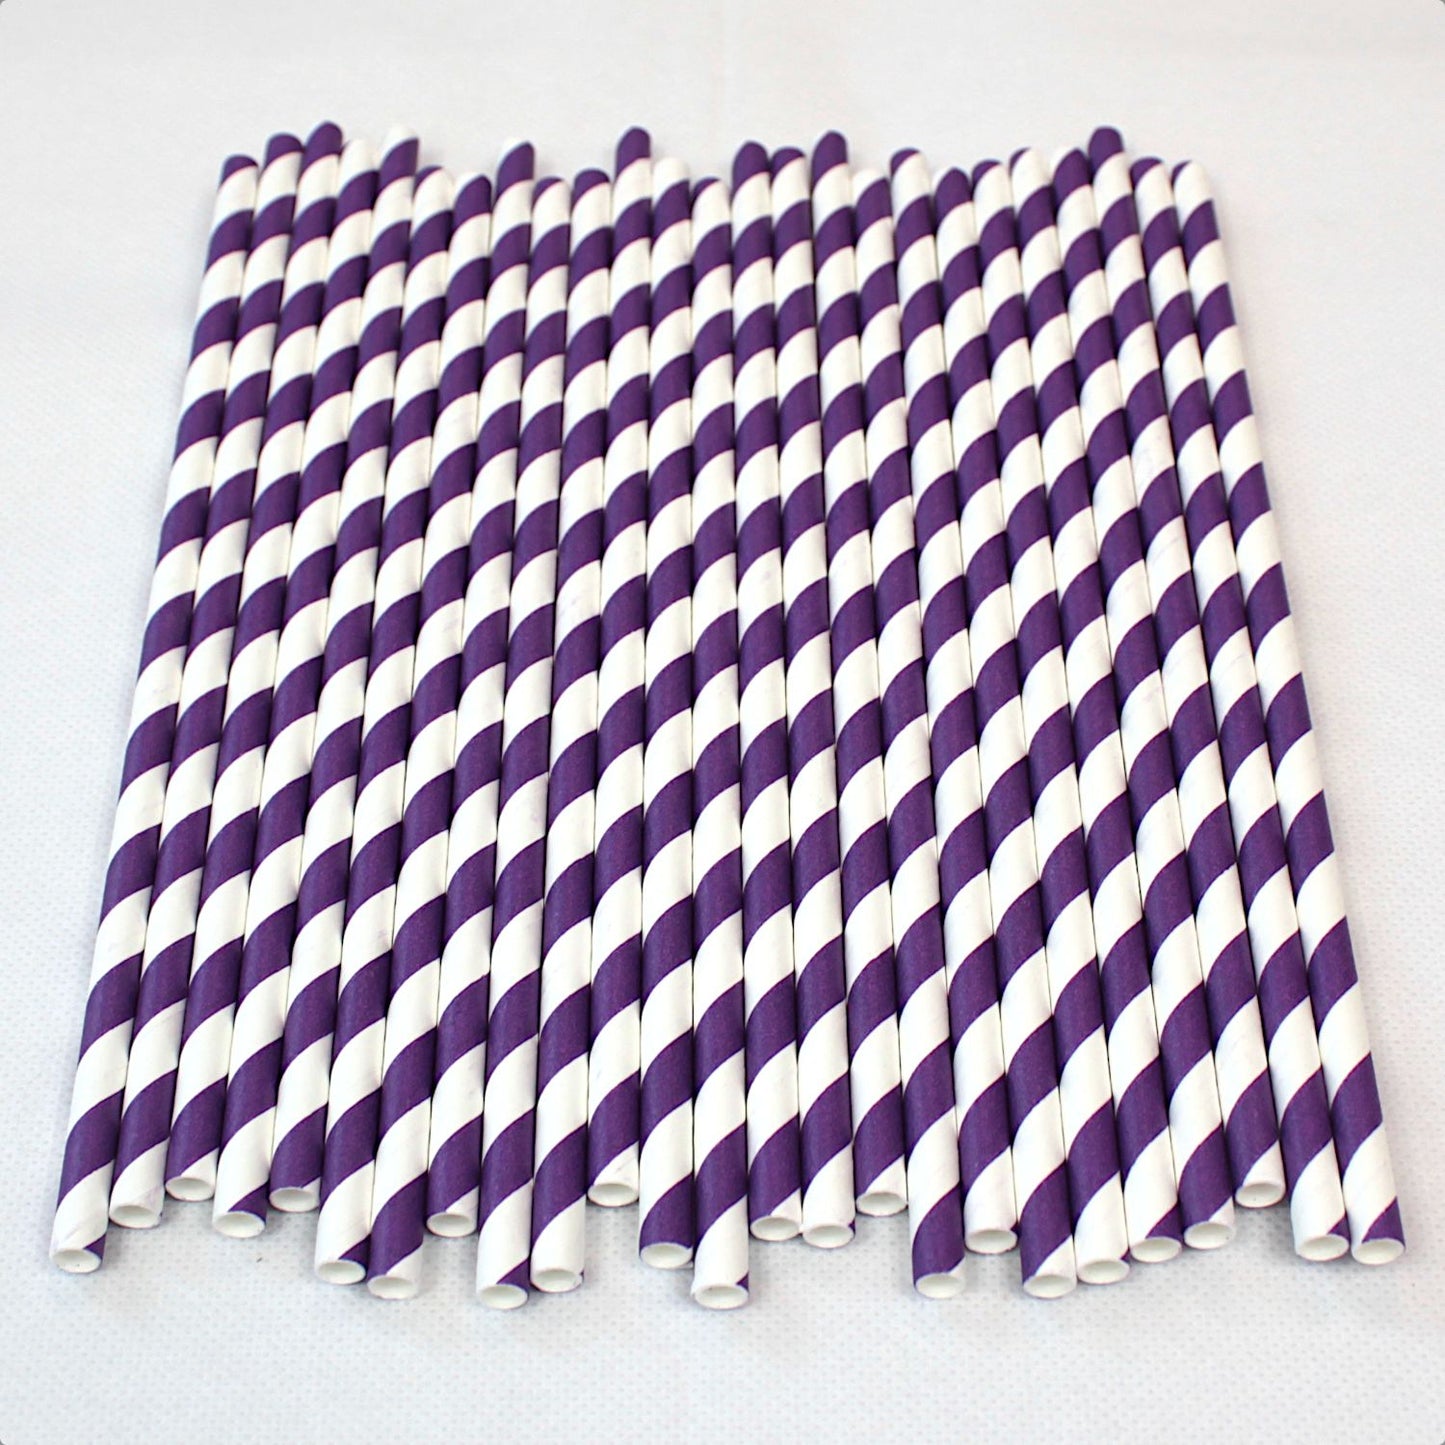 Purple & White Striped Paper Straws (6mm x 200mm) - Quality Drinking Straws - Intrinsic Paper Straws